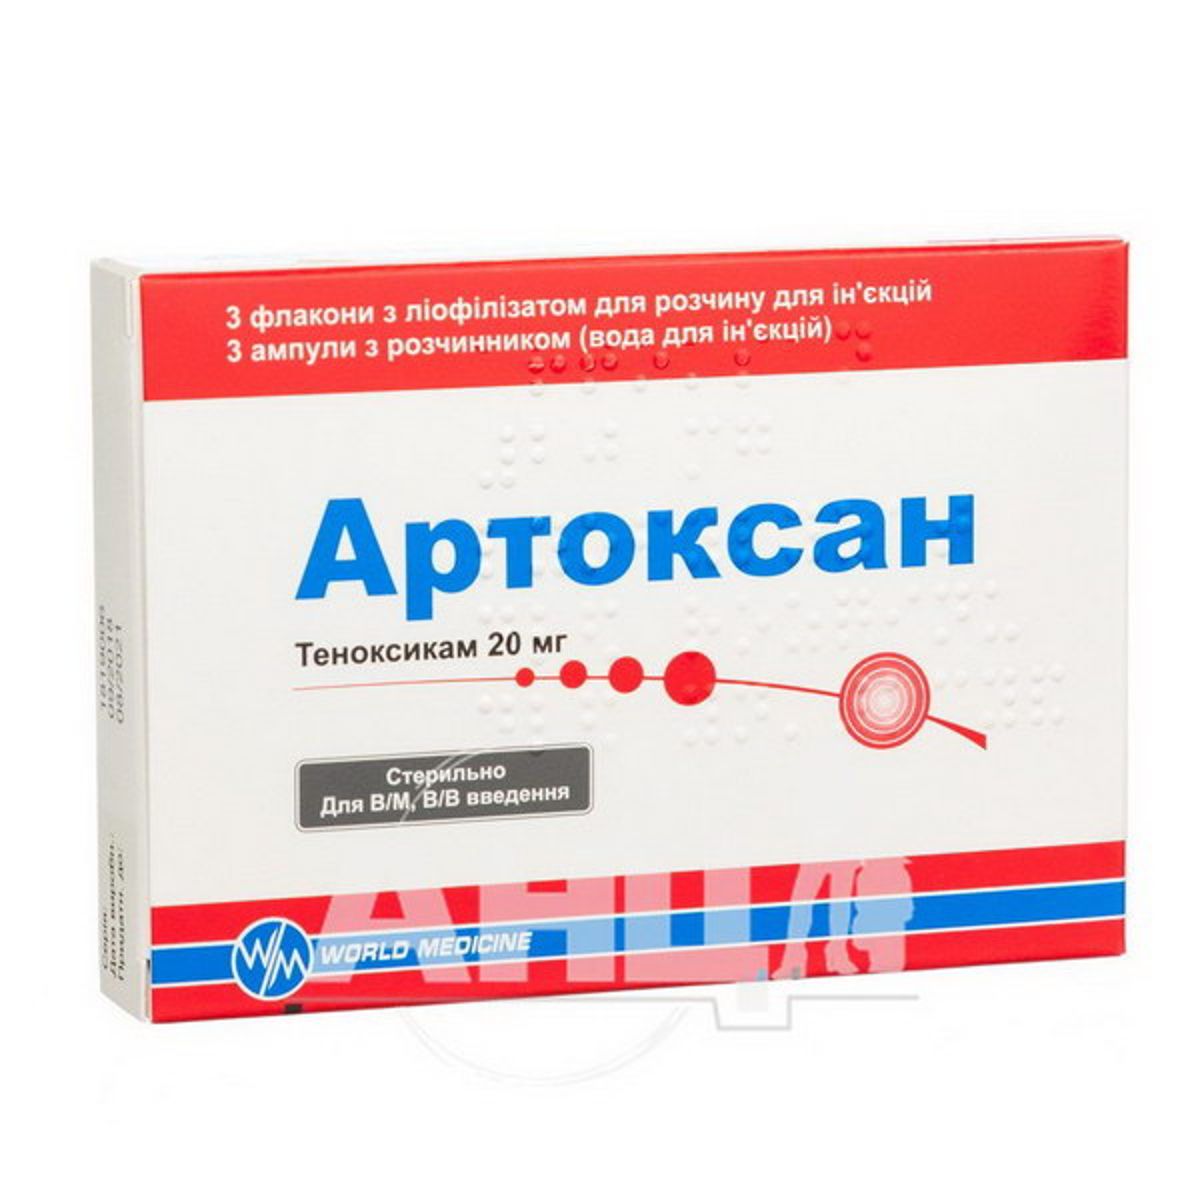 Артоксан уколы отзывы врачей. Артоксан 20 мг ампулы. Артоксан 20 мг 3. Артоксан 20 мг таблетки. Артоксан уколы 20мл.